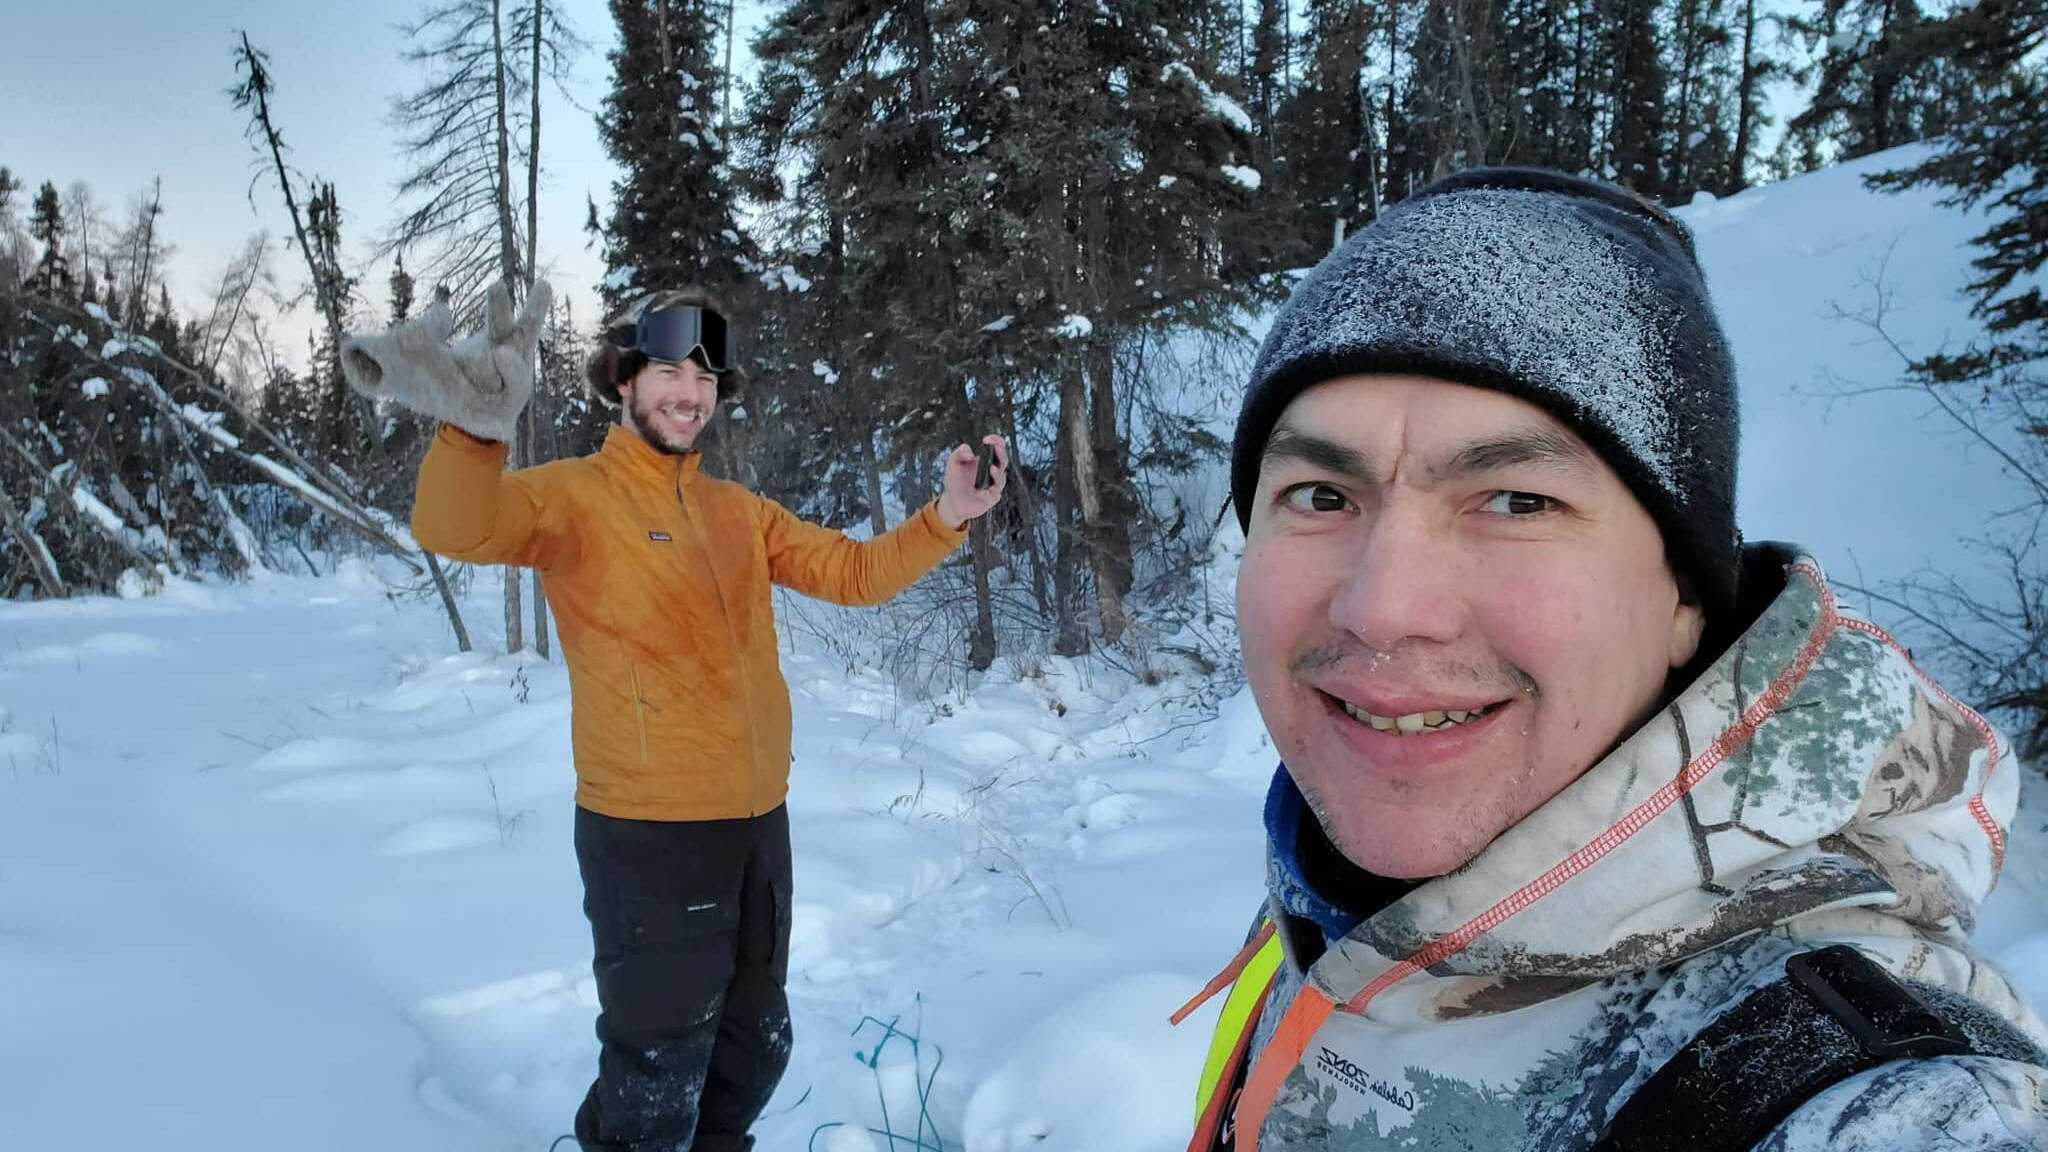 These two adventurous men from Cambridge Bay, Nunavut, Amory Wood, left, and Brent Nakashook, were out on the Ingraham Trail near Yellowknife, NT, busy hauling a sled by foot to get ready for their snowmobile journey from Yellowknife to Cambridge Bay. Lots of deep snow and too many trees! Photo courtesy of Navalik Tologanakᐅᑯᐊ ᐱᓕᕆᒃᑲᐃᑦ ᐊᖑᑎᑦ ᐃᖃᓗᒃᑑᑦᑎᐊᕐᒥᐅᑕᑦ, ᓄᓇᕗᒻᒥ, ᐊᐃᒧᕆ ᕗᑦ, ᓴᐅᒥᖕᒥ, ᐊᒻᒪ ᐳᕋᓐᑦ ᓇᑲᓱᒃ ᐃᙳᕋᒻ ᐃᒡᓕᓂᖓᓂ ᔭᓗᓇᐃᕝ, ᓄᓇᑦᓯᐊᖅ ᖃᓂᒋᔭᖓᓂ, ᐅᓯᕗᑦ ᖃᒧᑎᖕᒥ ᐱᓱᒃᖢᑎᒃ ᐸᕐᓇᖕᓂᕐᒧᑦ ᓯᑭᑑᒃᑯᑦ ᐃᖏᕐᕋᓂᐊᕐᓂᖏᓐᓂ ᔭᓗᓇᐃᕝᒥ ᐃᖃᓗᒃᑑᑦᑎᐊᕐᒧᑦ. ᐃᑎᔪᐊᓗᖕᒥ ᐊᐳᑎᖃᕐᔪᐊᖅᐳᖅ ᐊᒻᒪ ᓇᐹᖅᑐᖃᓗᐊᖅᑐᖅ !